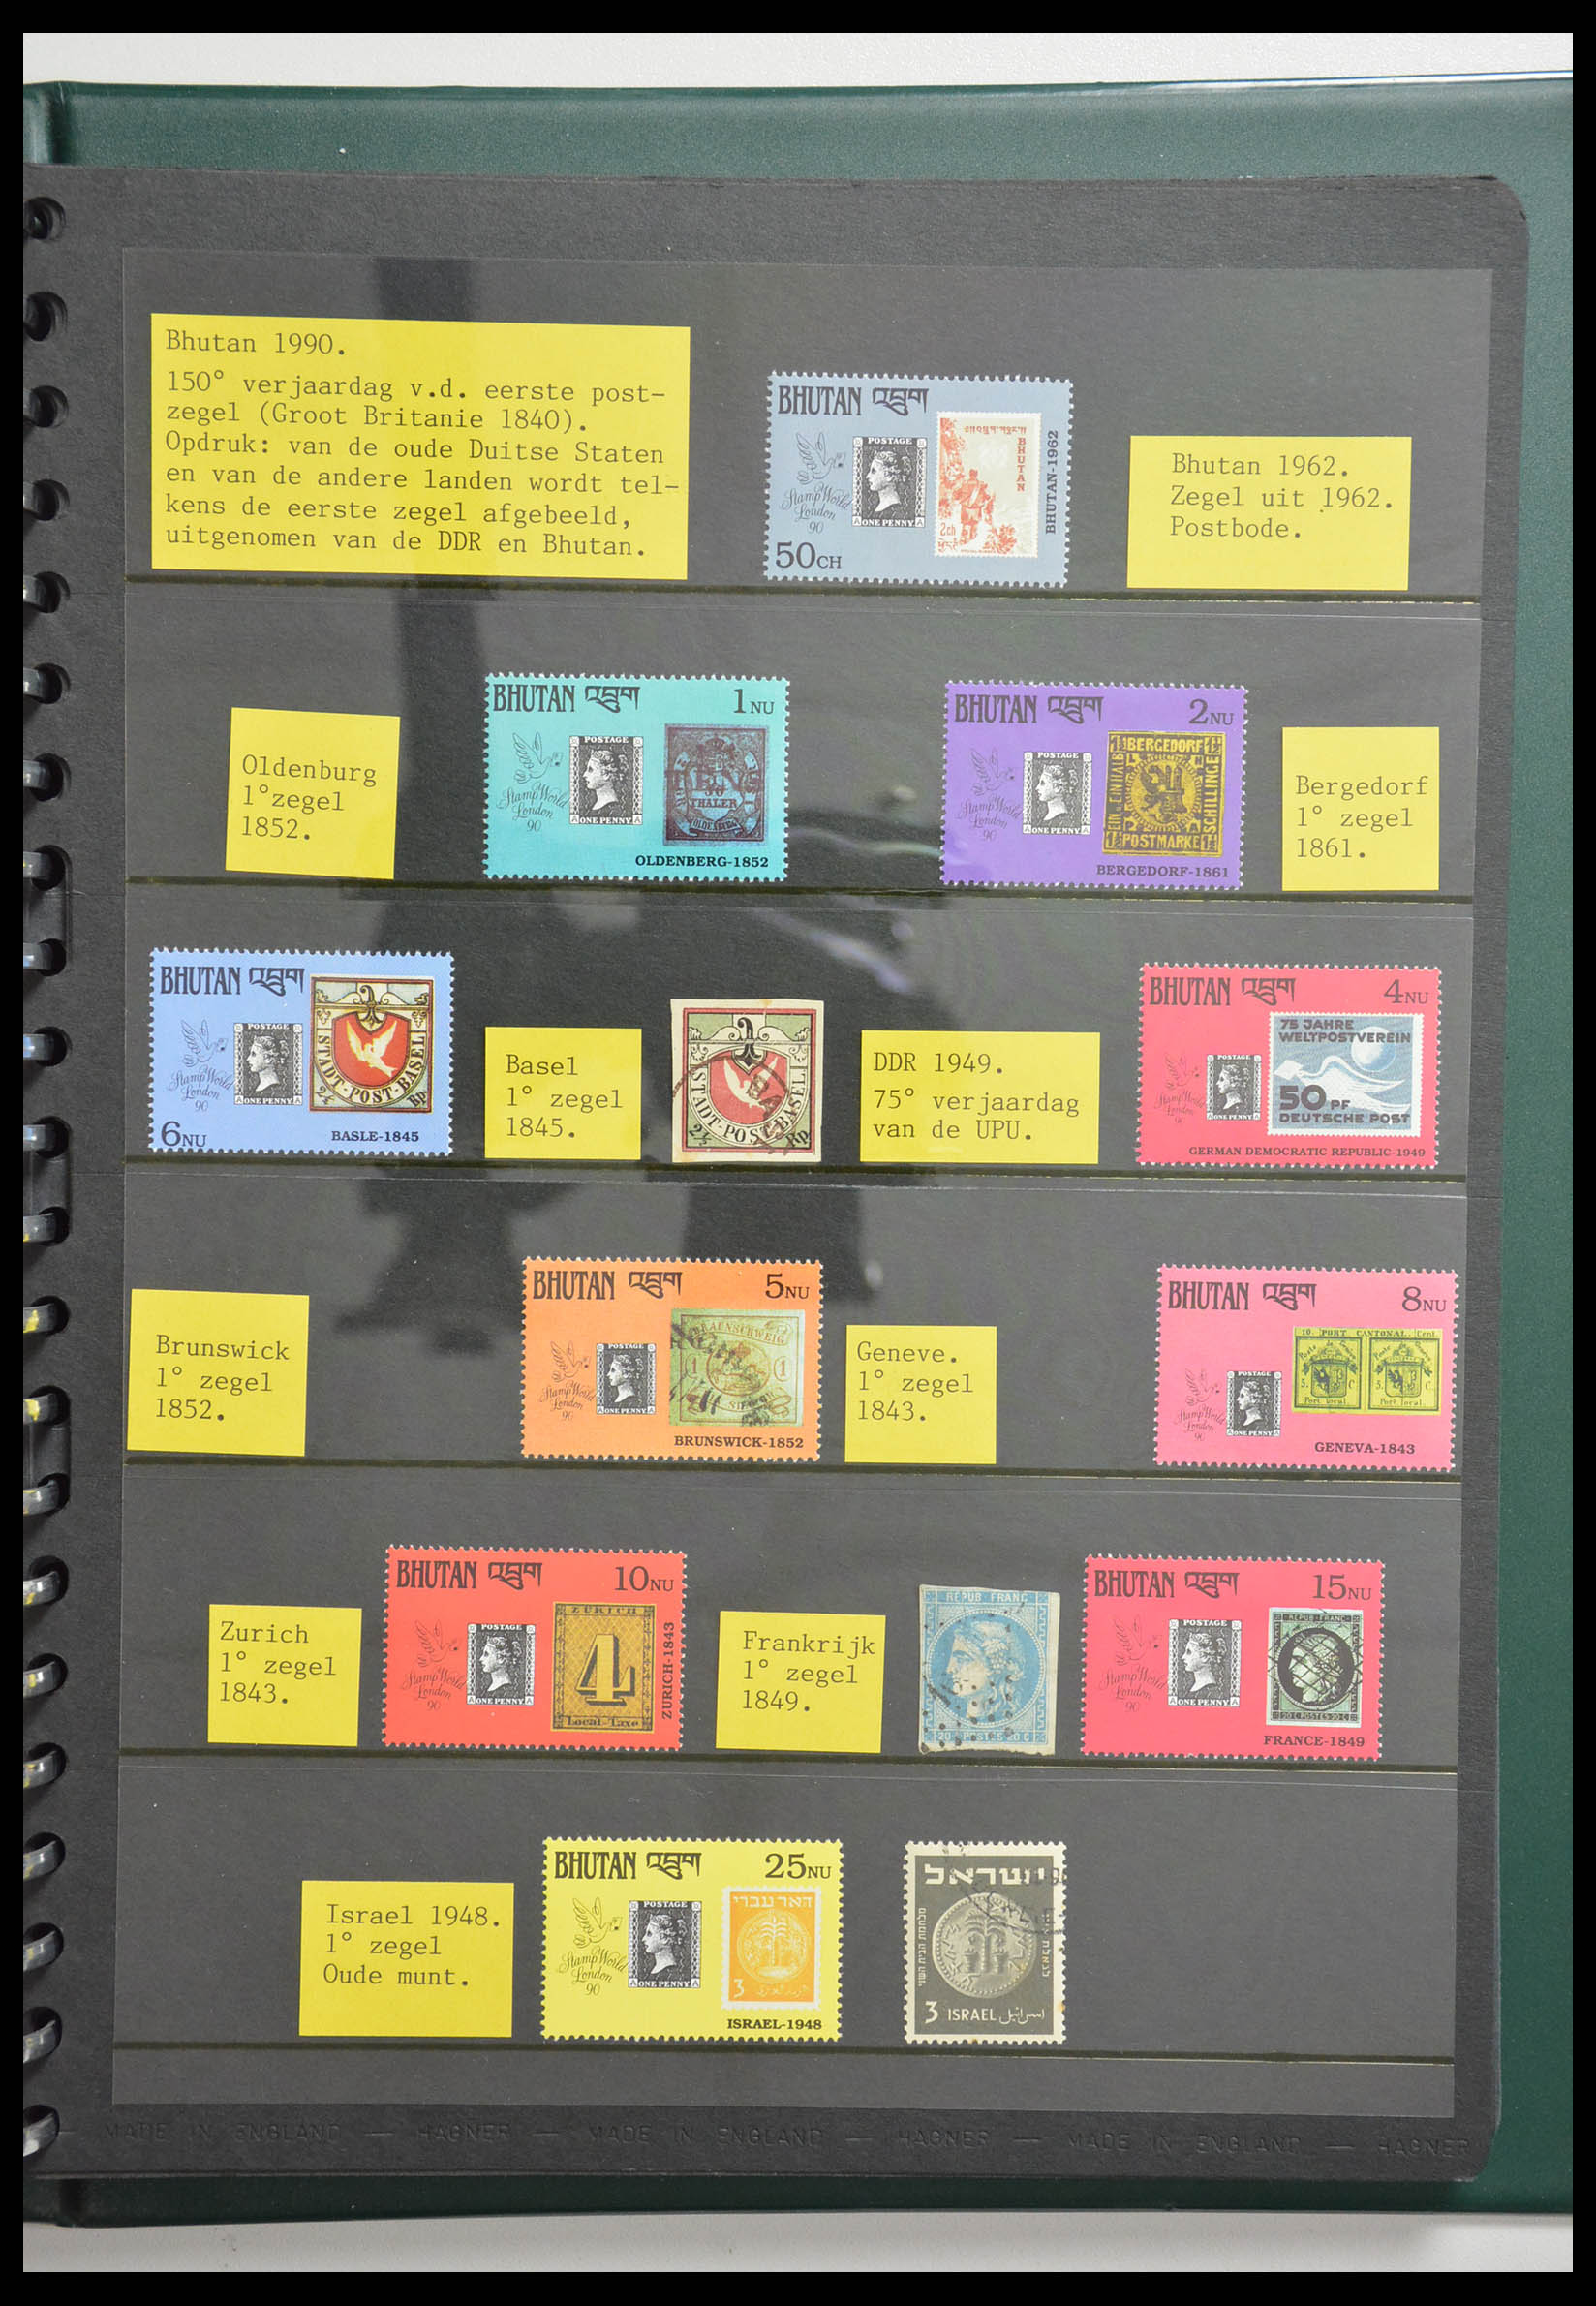 28337 034 - 28337 Postzegel op postzegel 1840-2001.